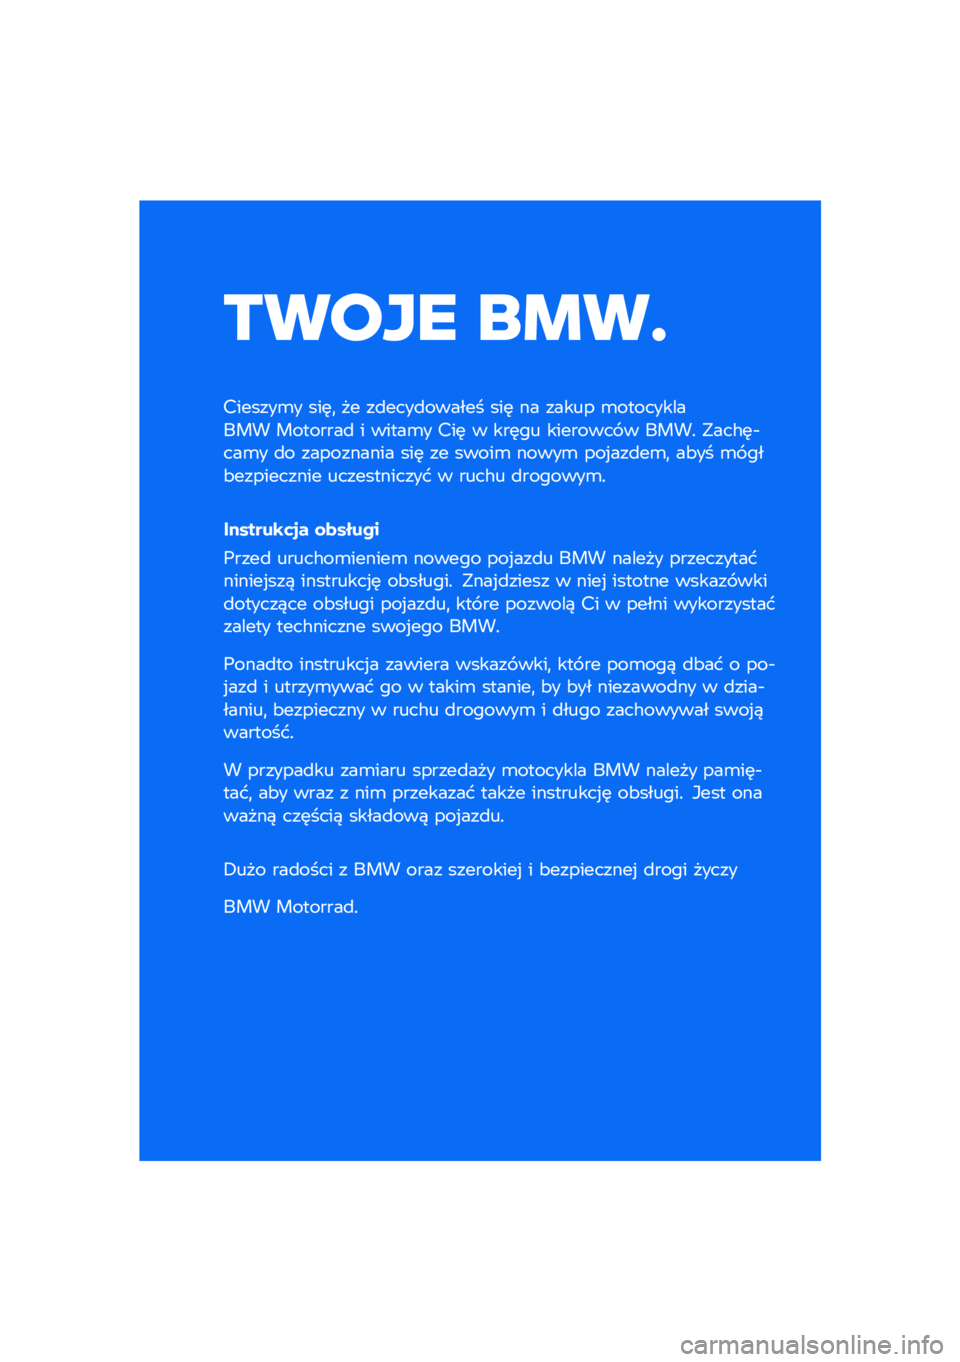 BMW MOTORRAD R NINE T 2021  Instrukcja obsługi (in Polish) ����� ��\b��	
�������\b� ���	�
 �� ��
����
������ ���	 �� ����� �\b����������� ��������
 � �����\b� ���	 � ���	�� �������� �